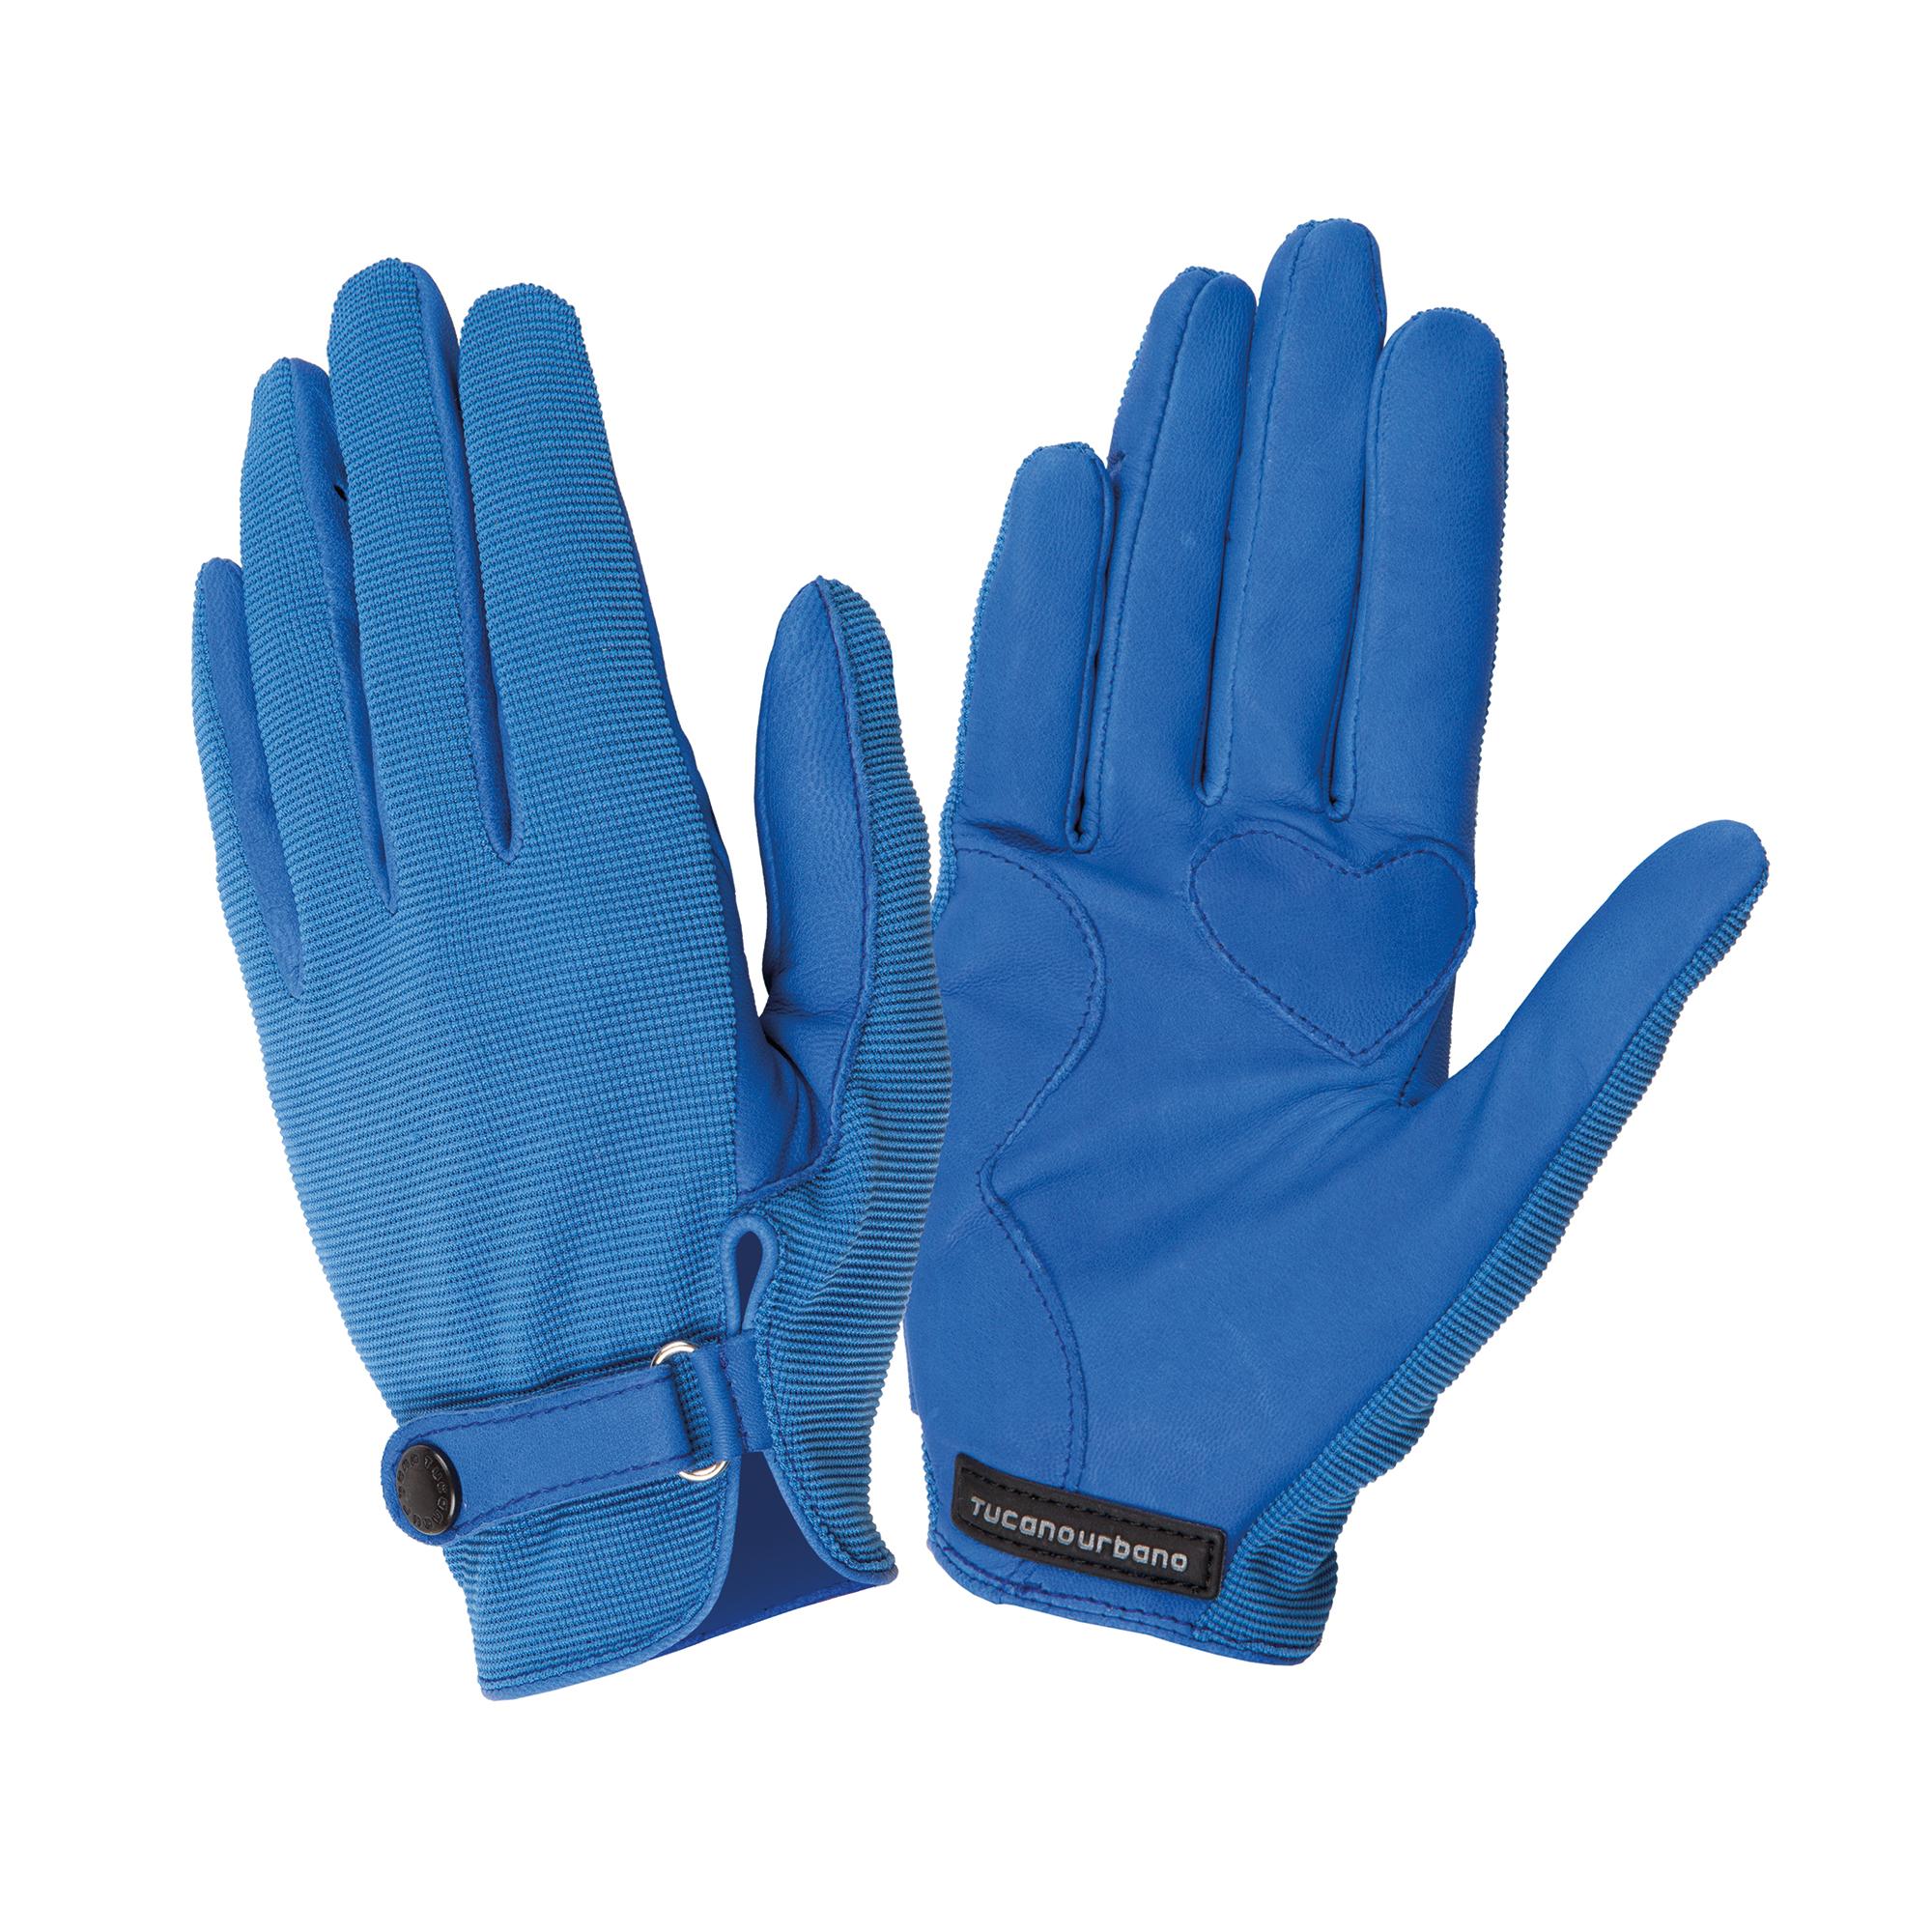 Gloves Eva Guant Light Blue Tucano Urbano